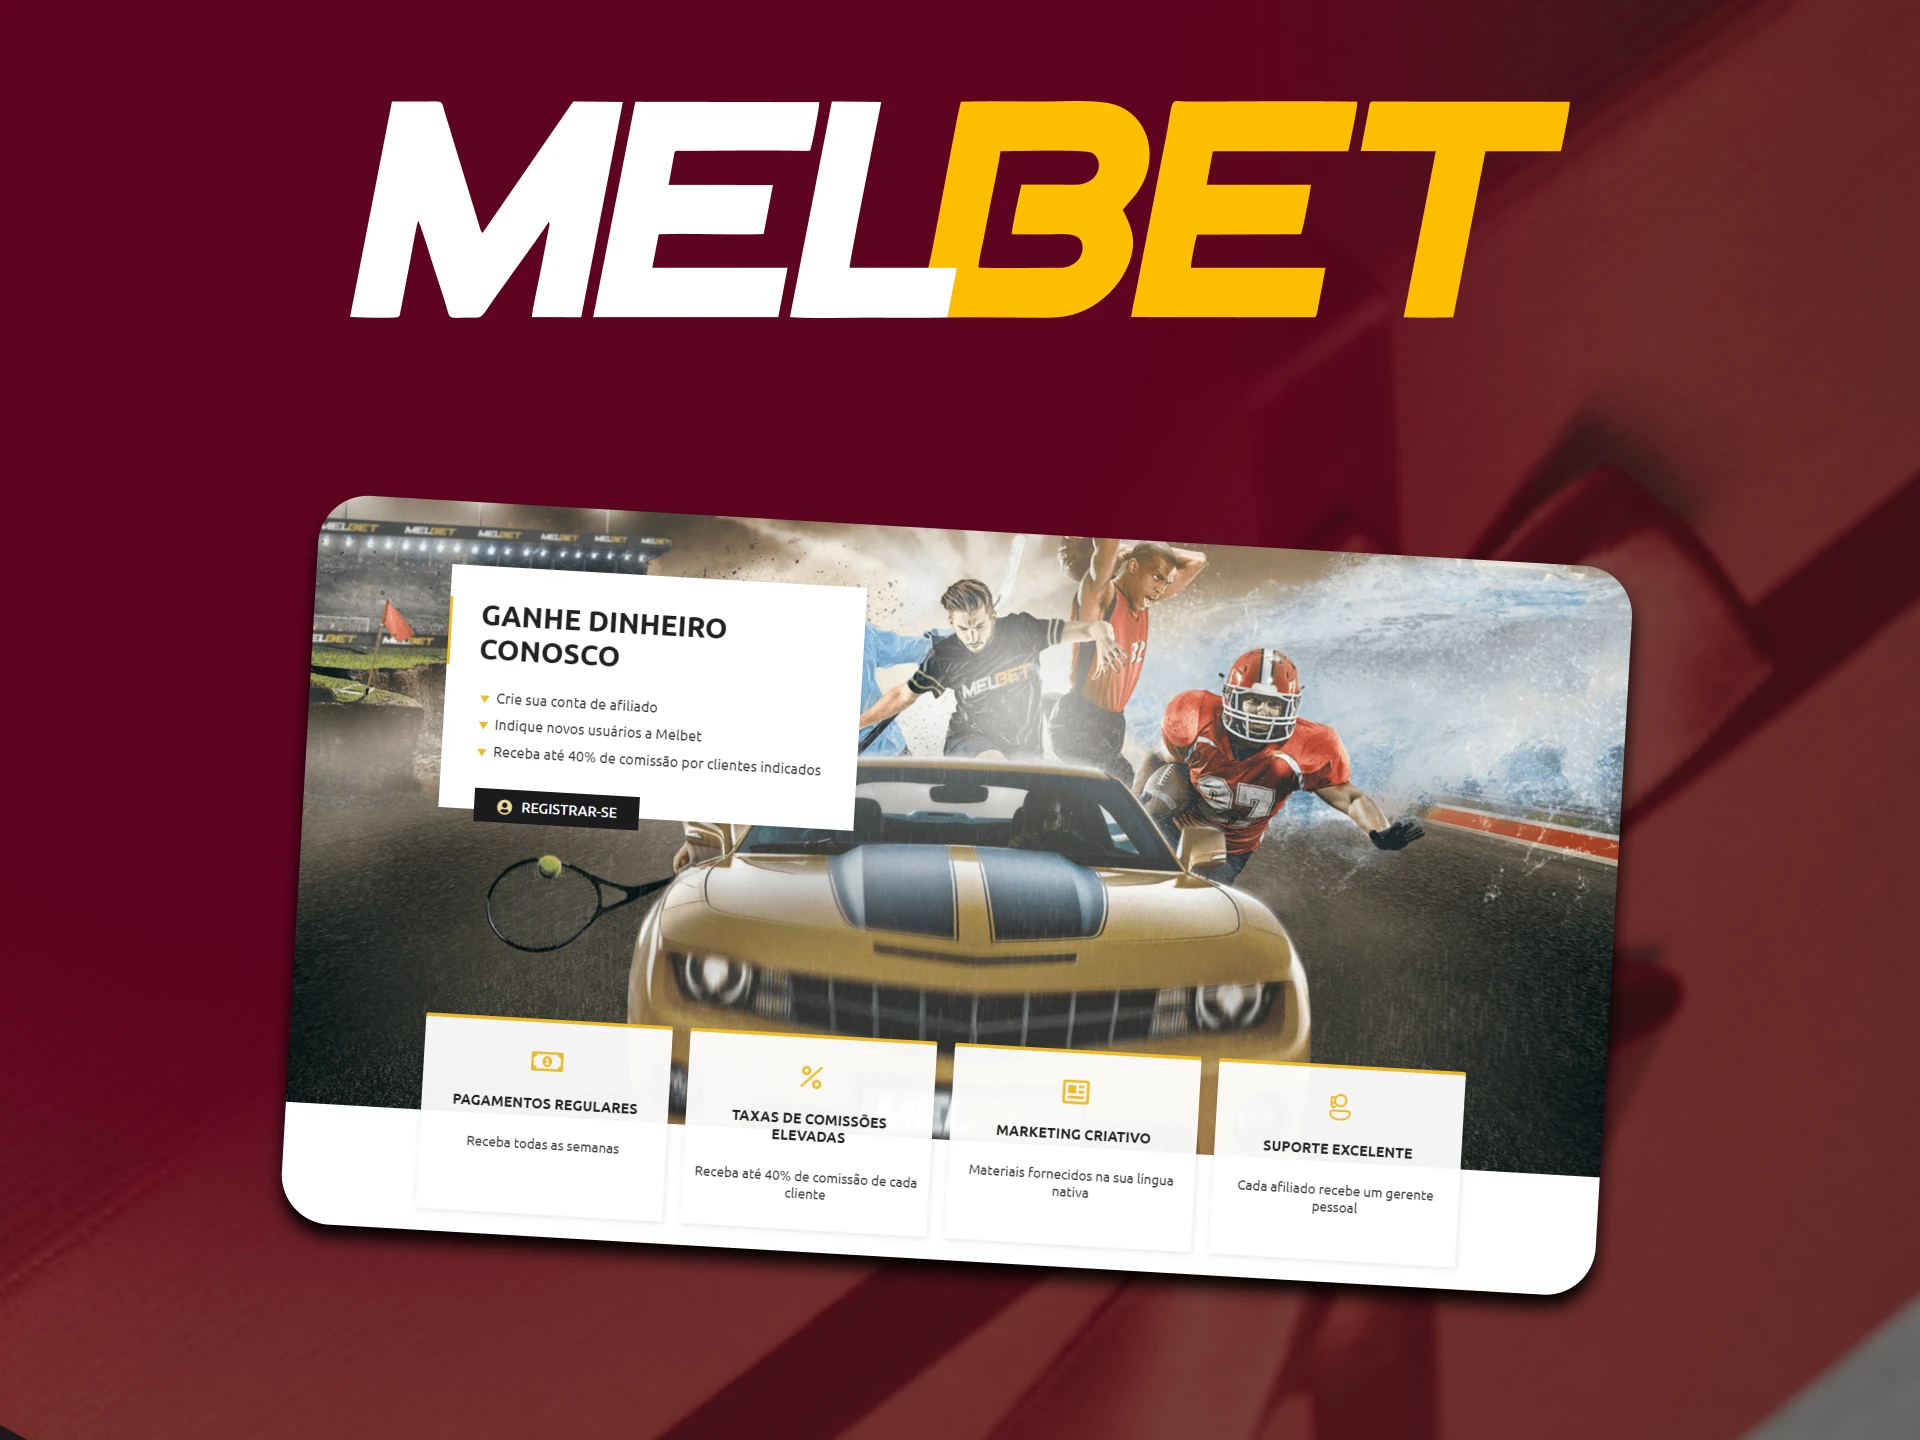 Melbet App Bangladesh - Download, Install & Login Guide